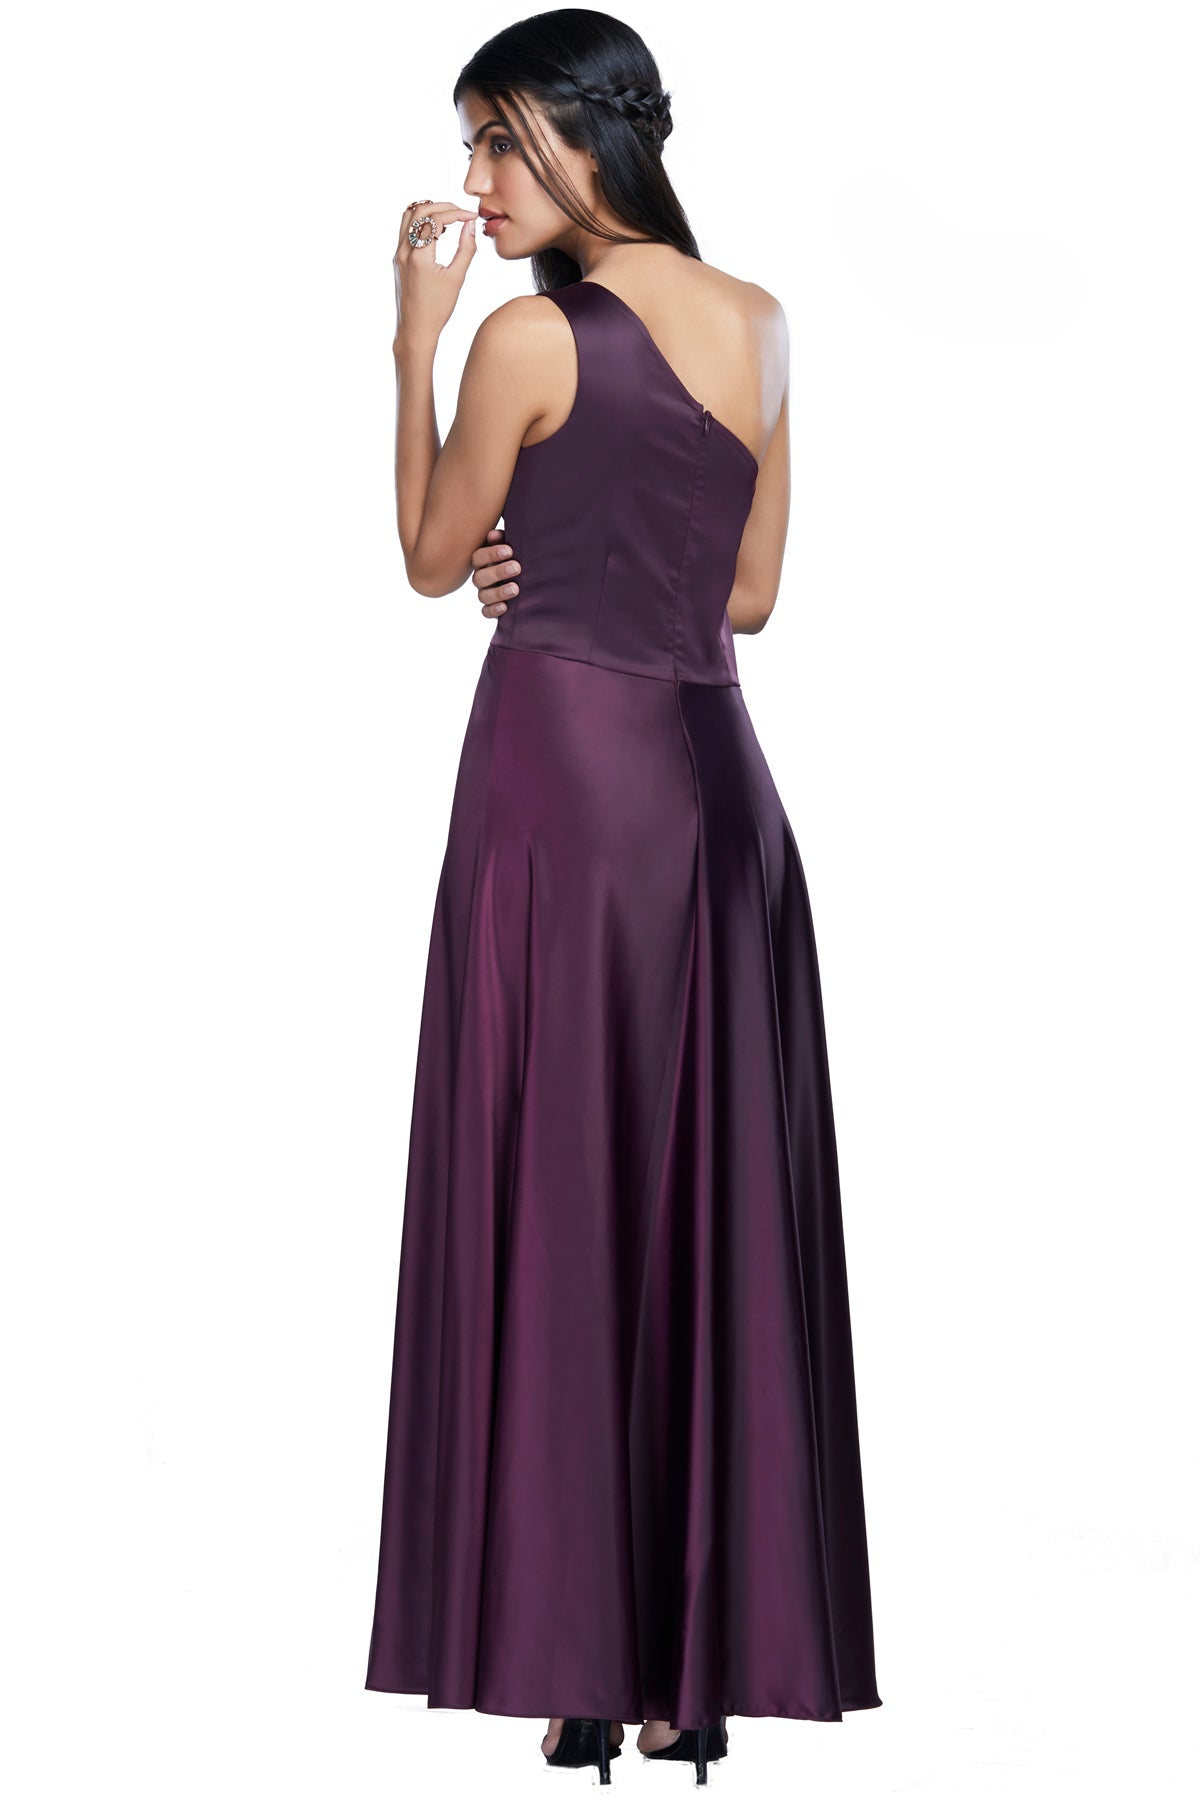 Purple One Shoulder Cocktail Dress